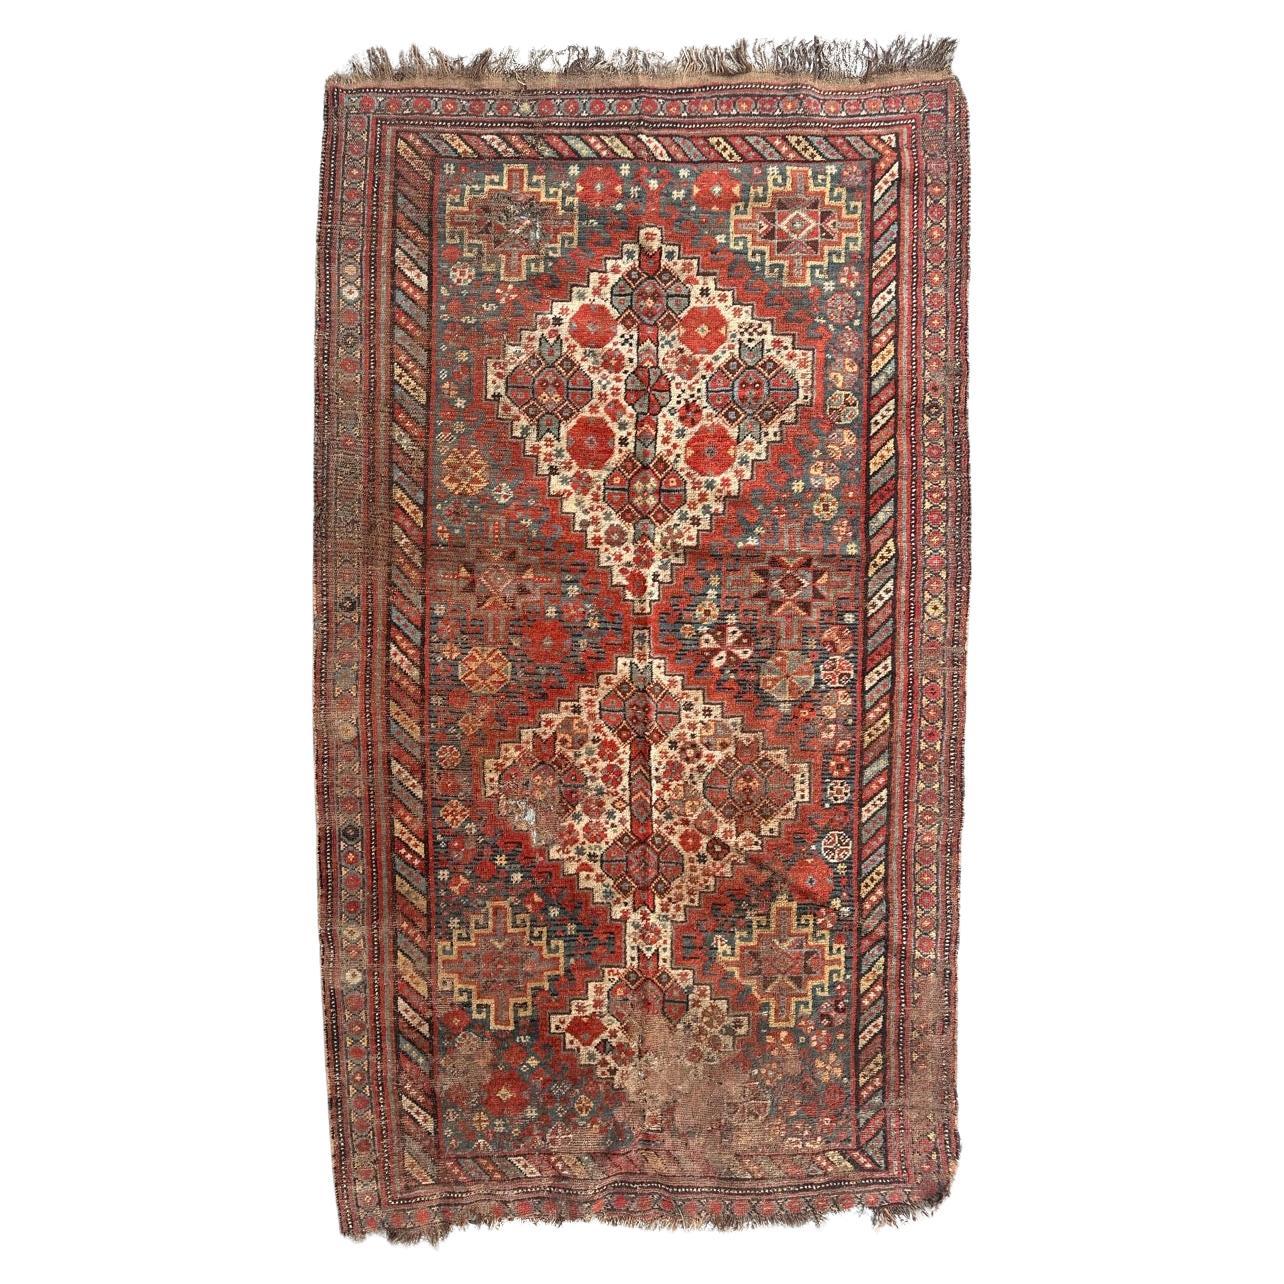 Bobyrug’s distressed antique Shiraz rug For Sale